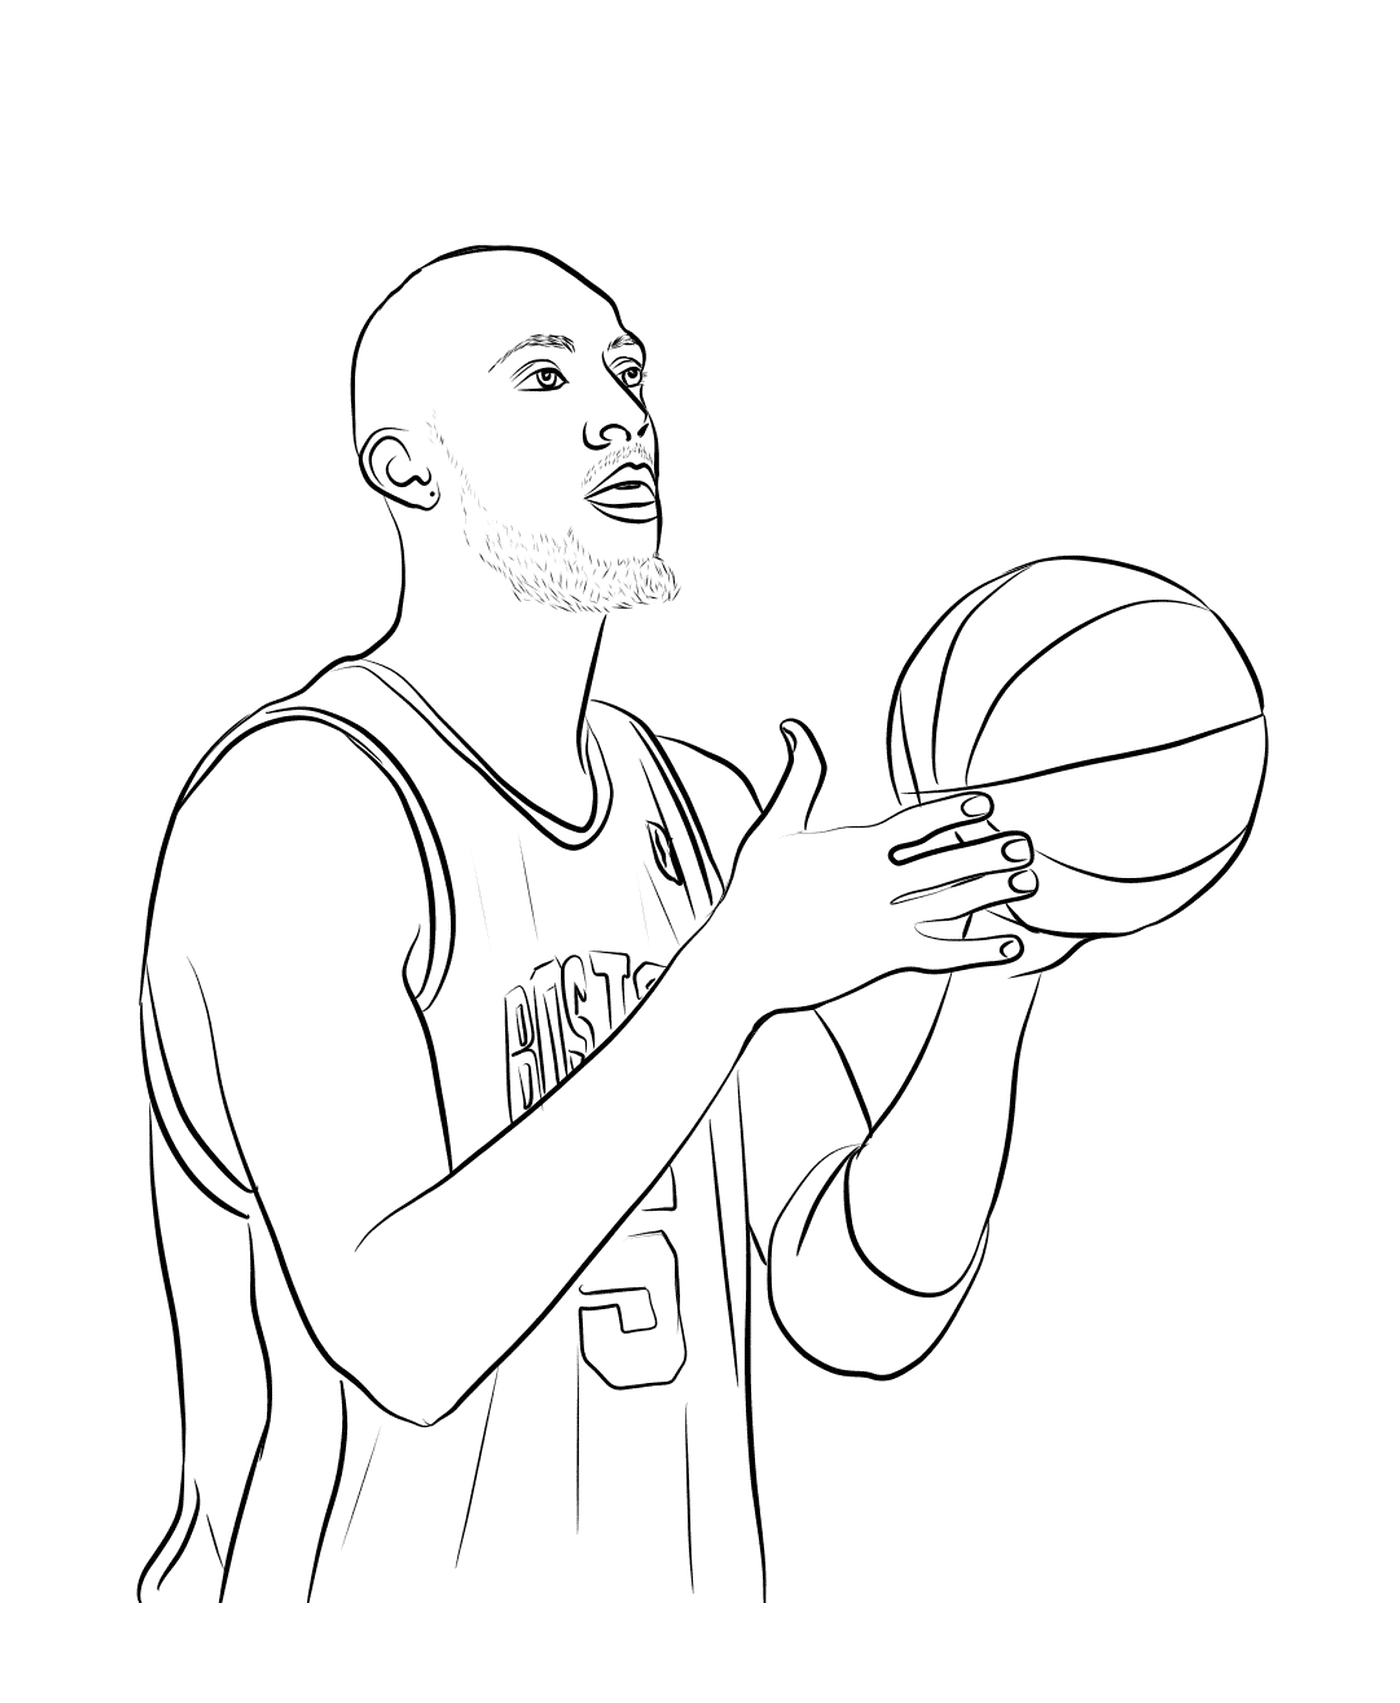  Kevin Garnett 拥有一个篮球球 